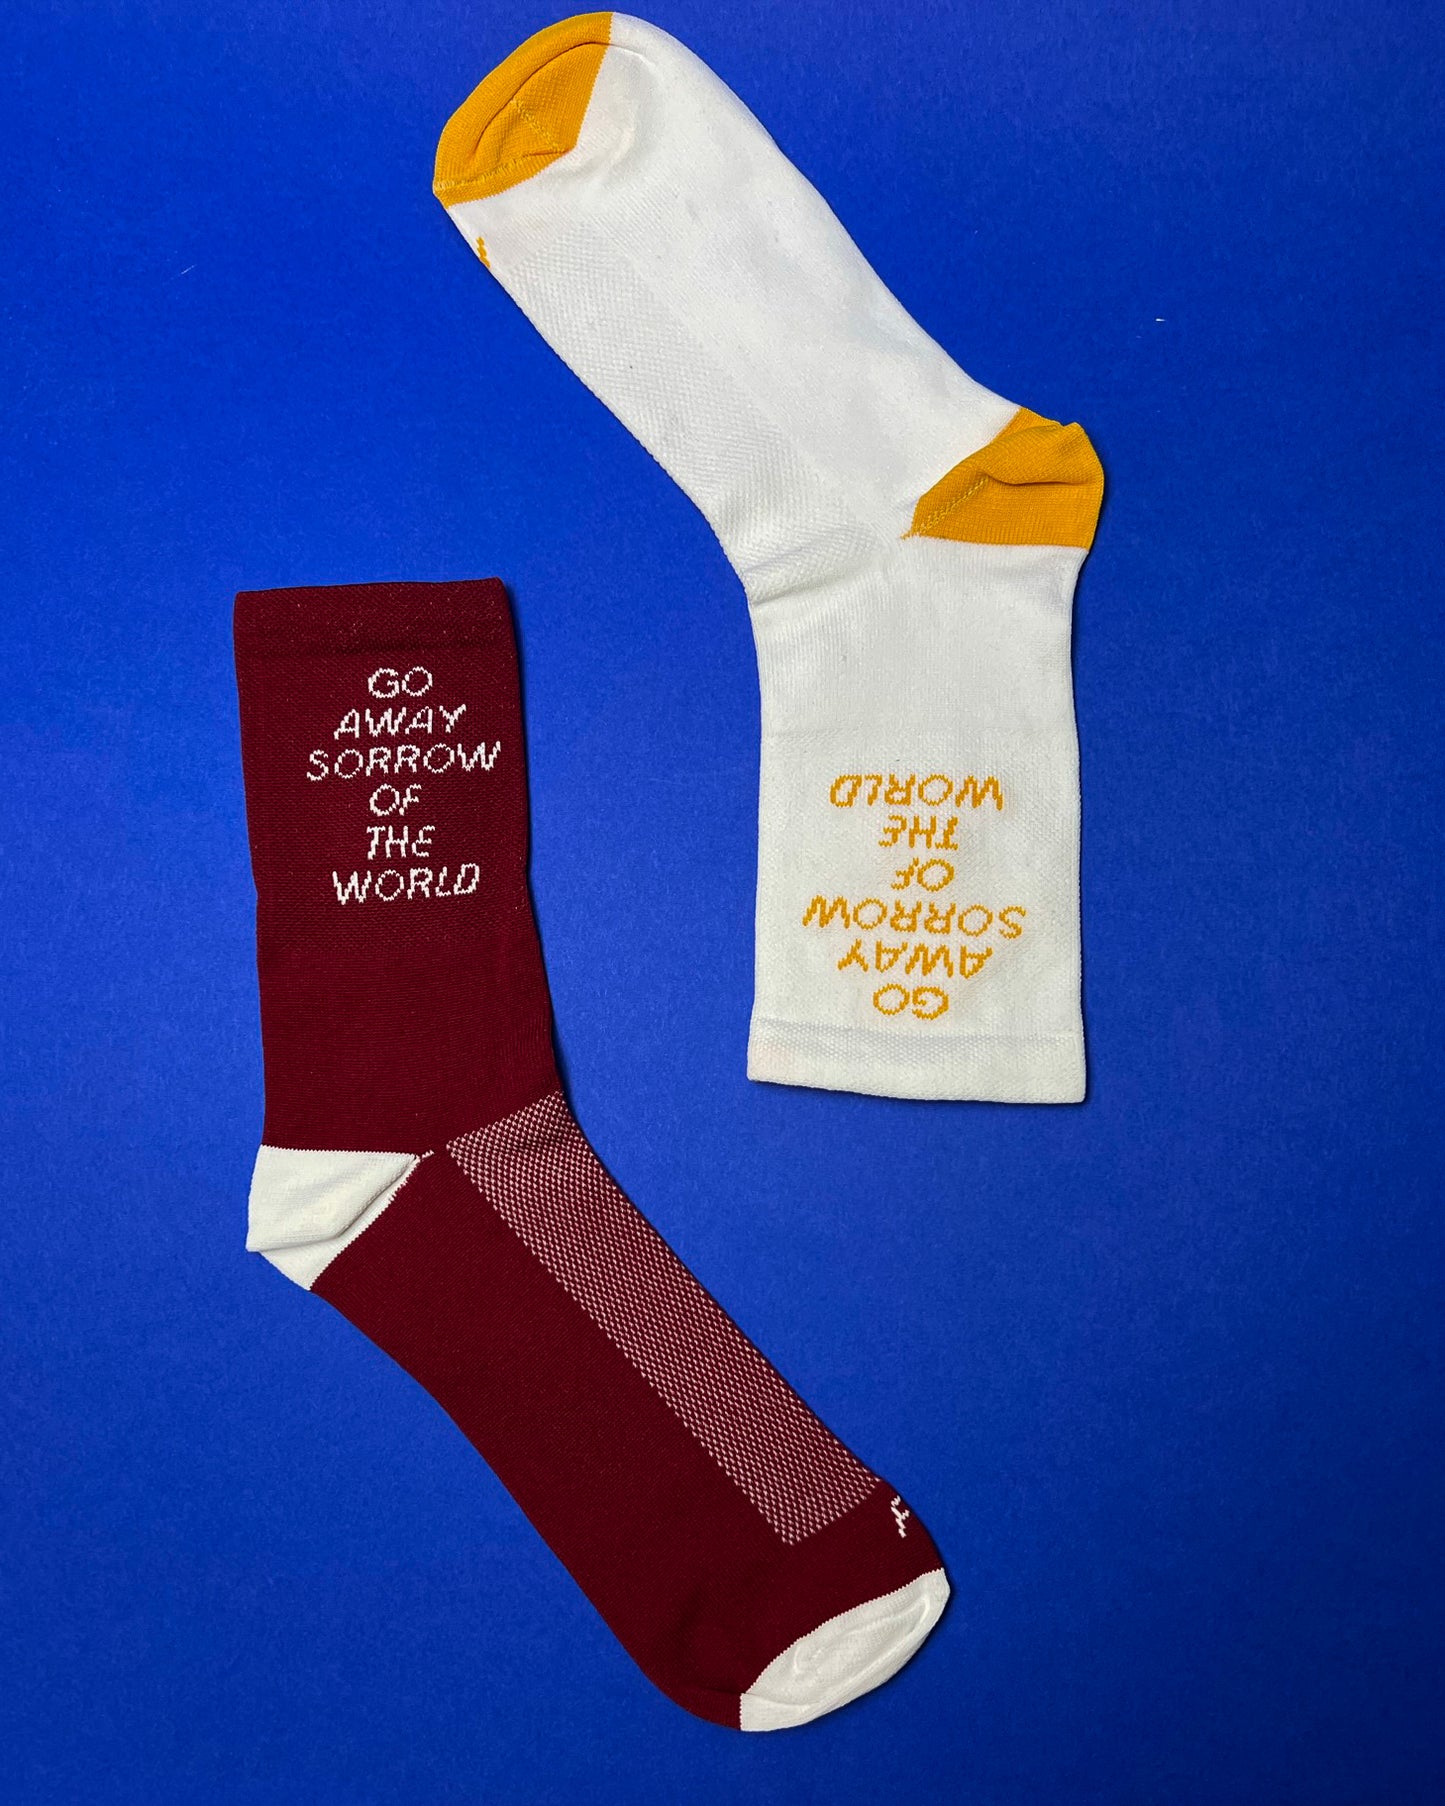 GO AWAY SORROW OF THE WORLD Double pack socks